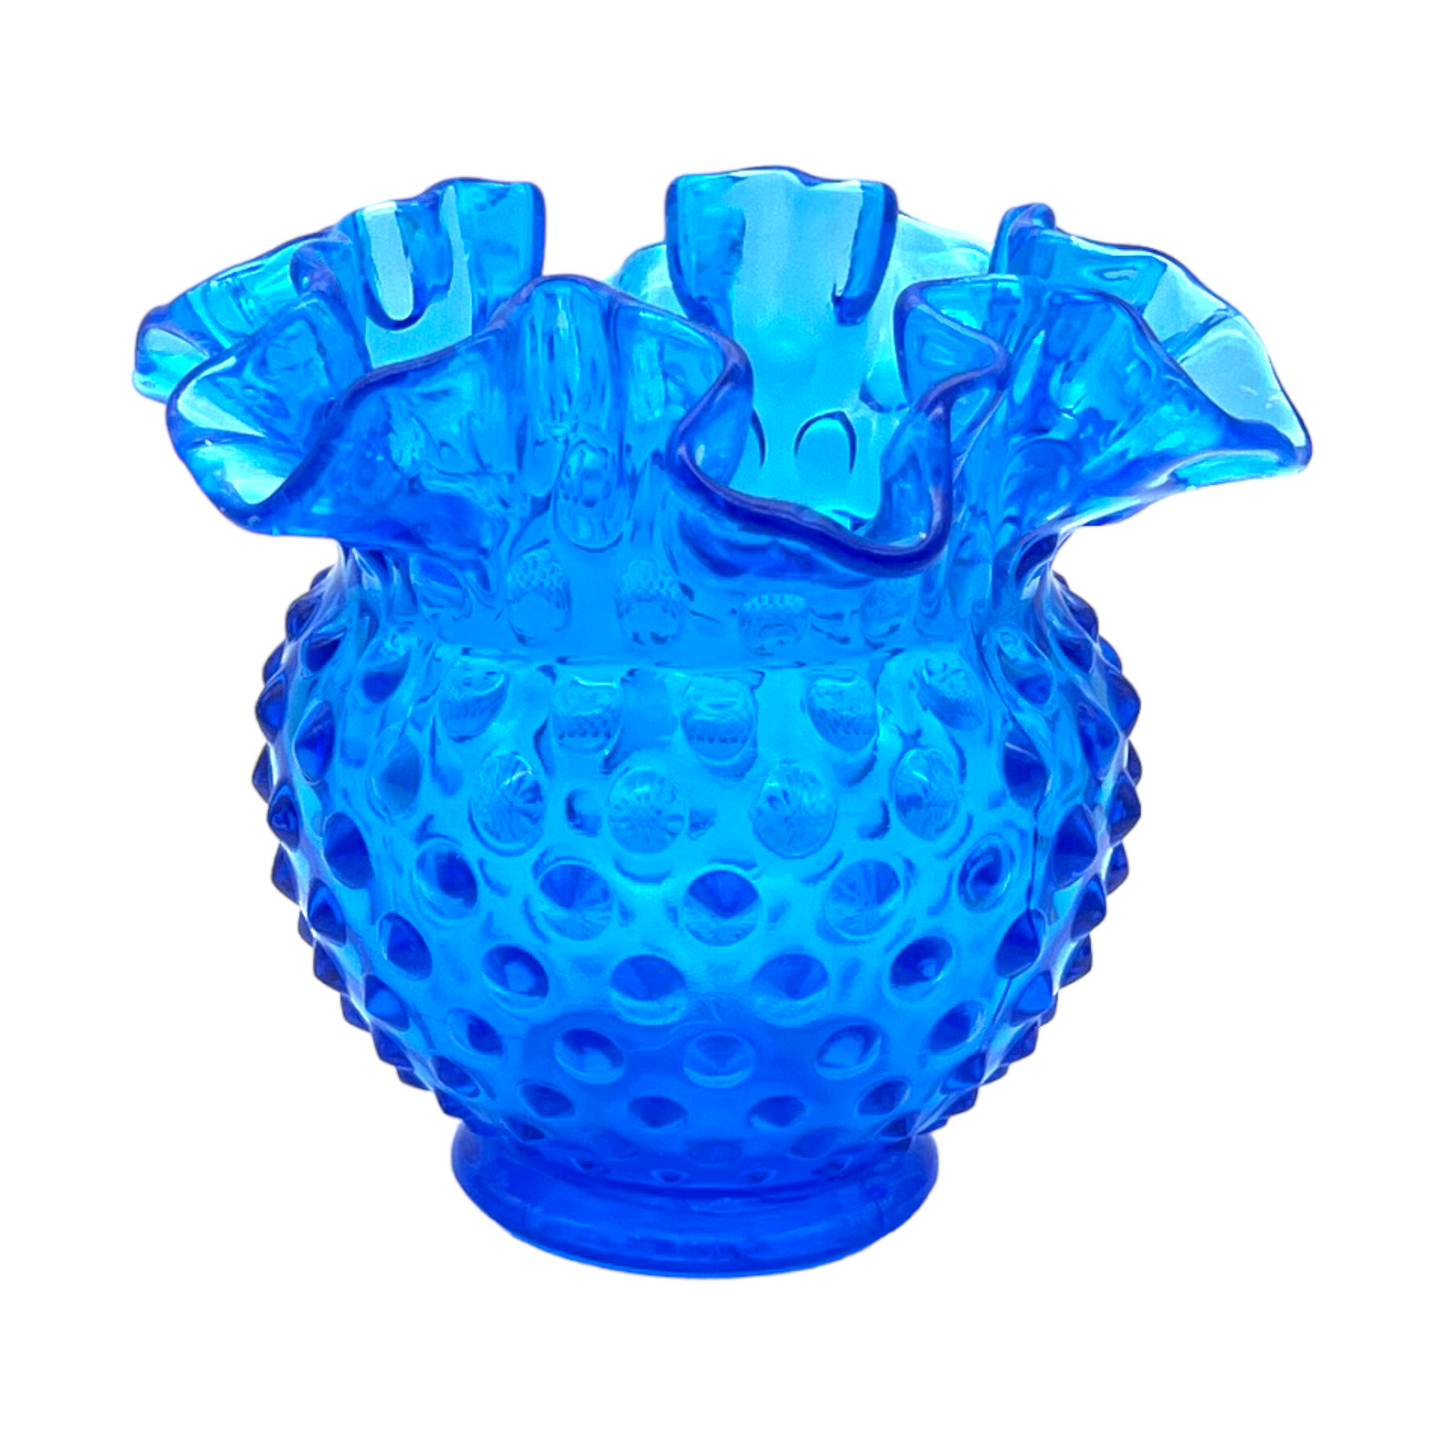 Vintage Blue Hobnail Vase - A Timeless Masterpiece in Art Glass